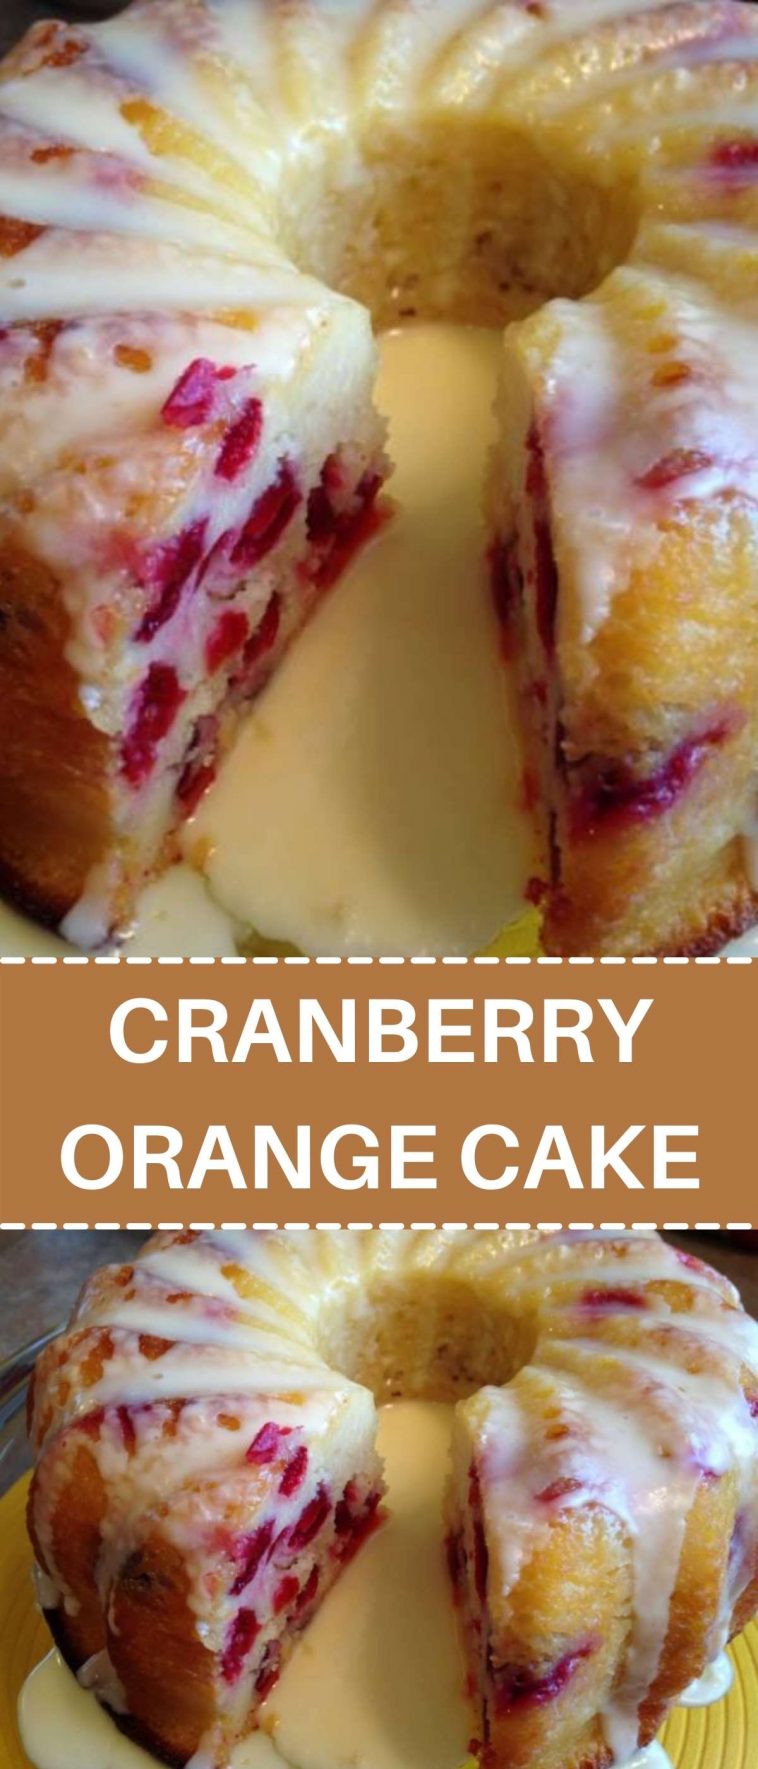 CRANBERRY ORANGE CAKE